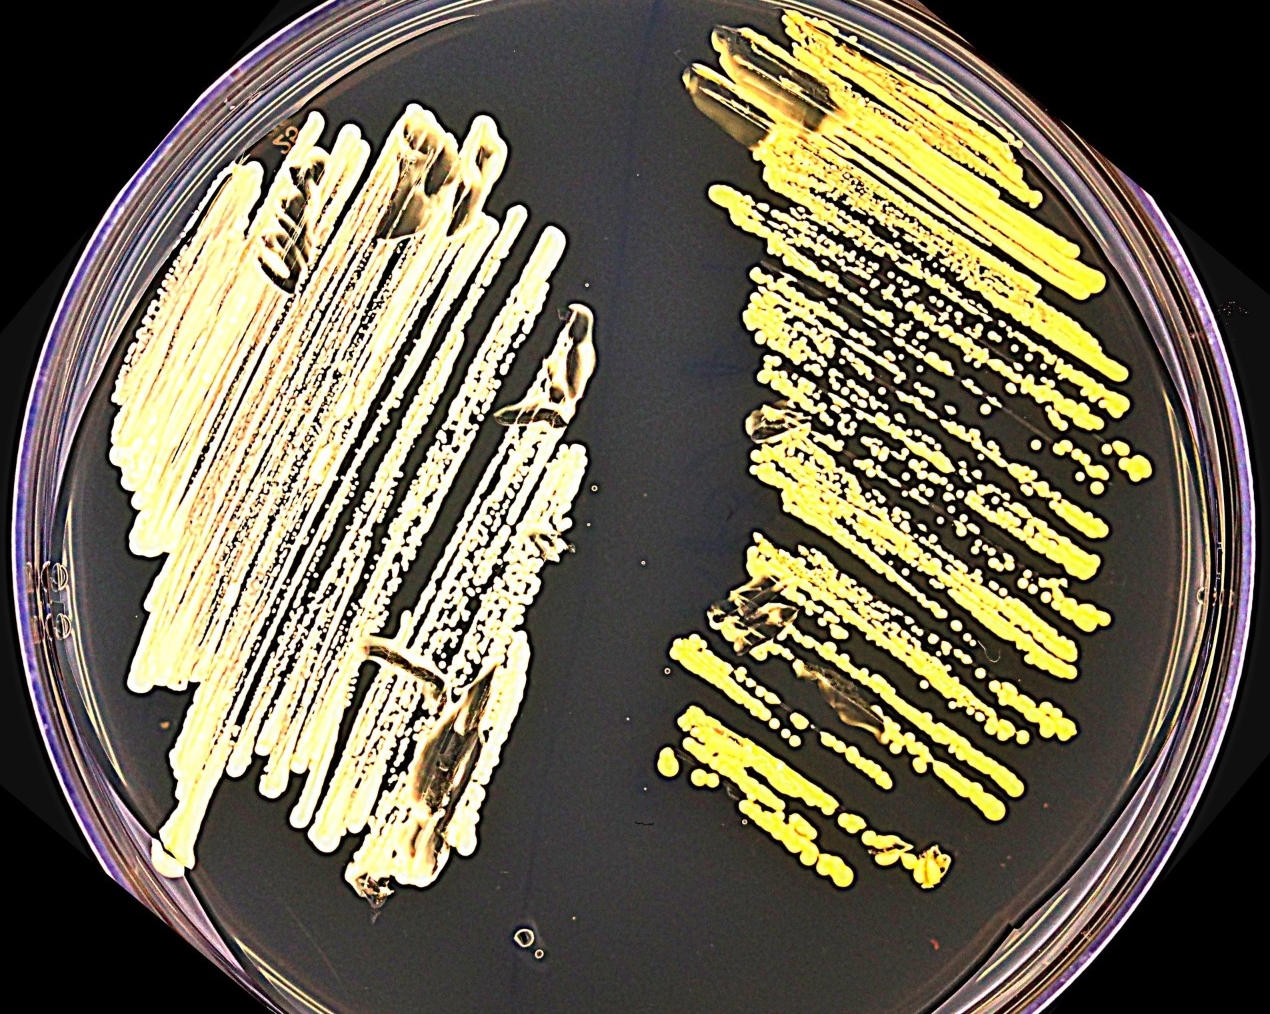 Yellow yeast cells